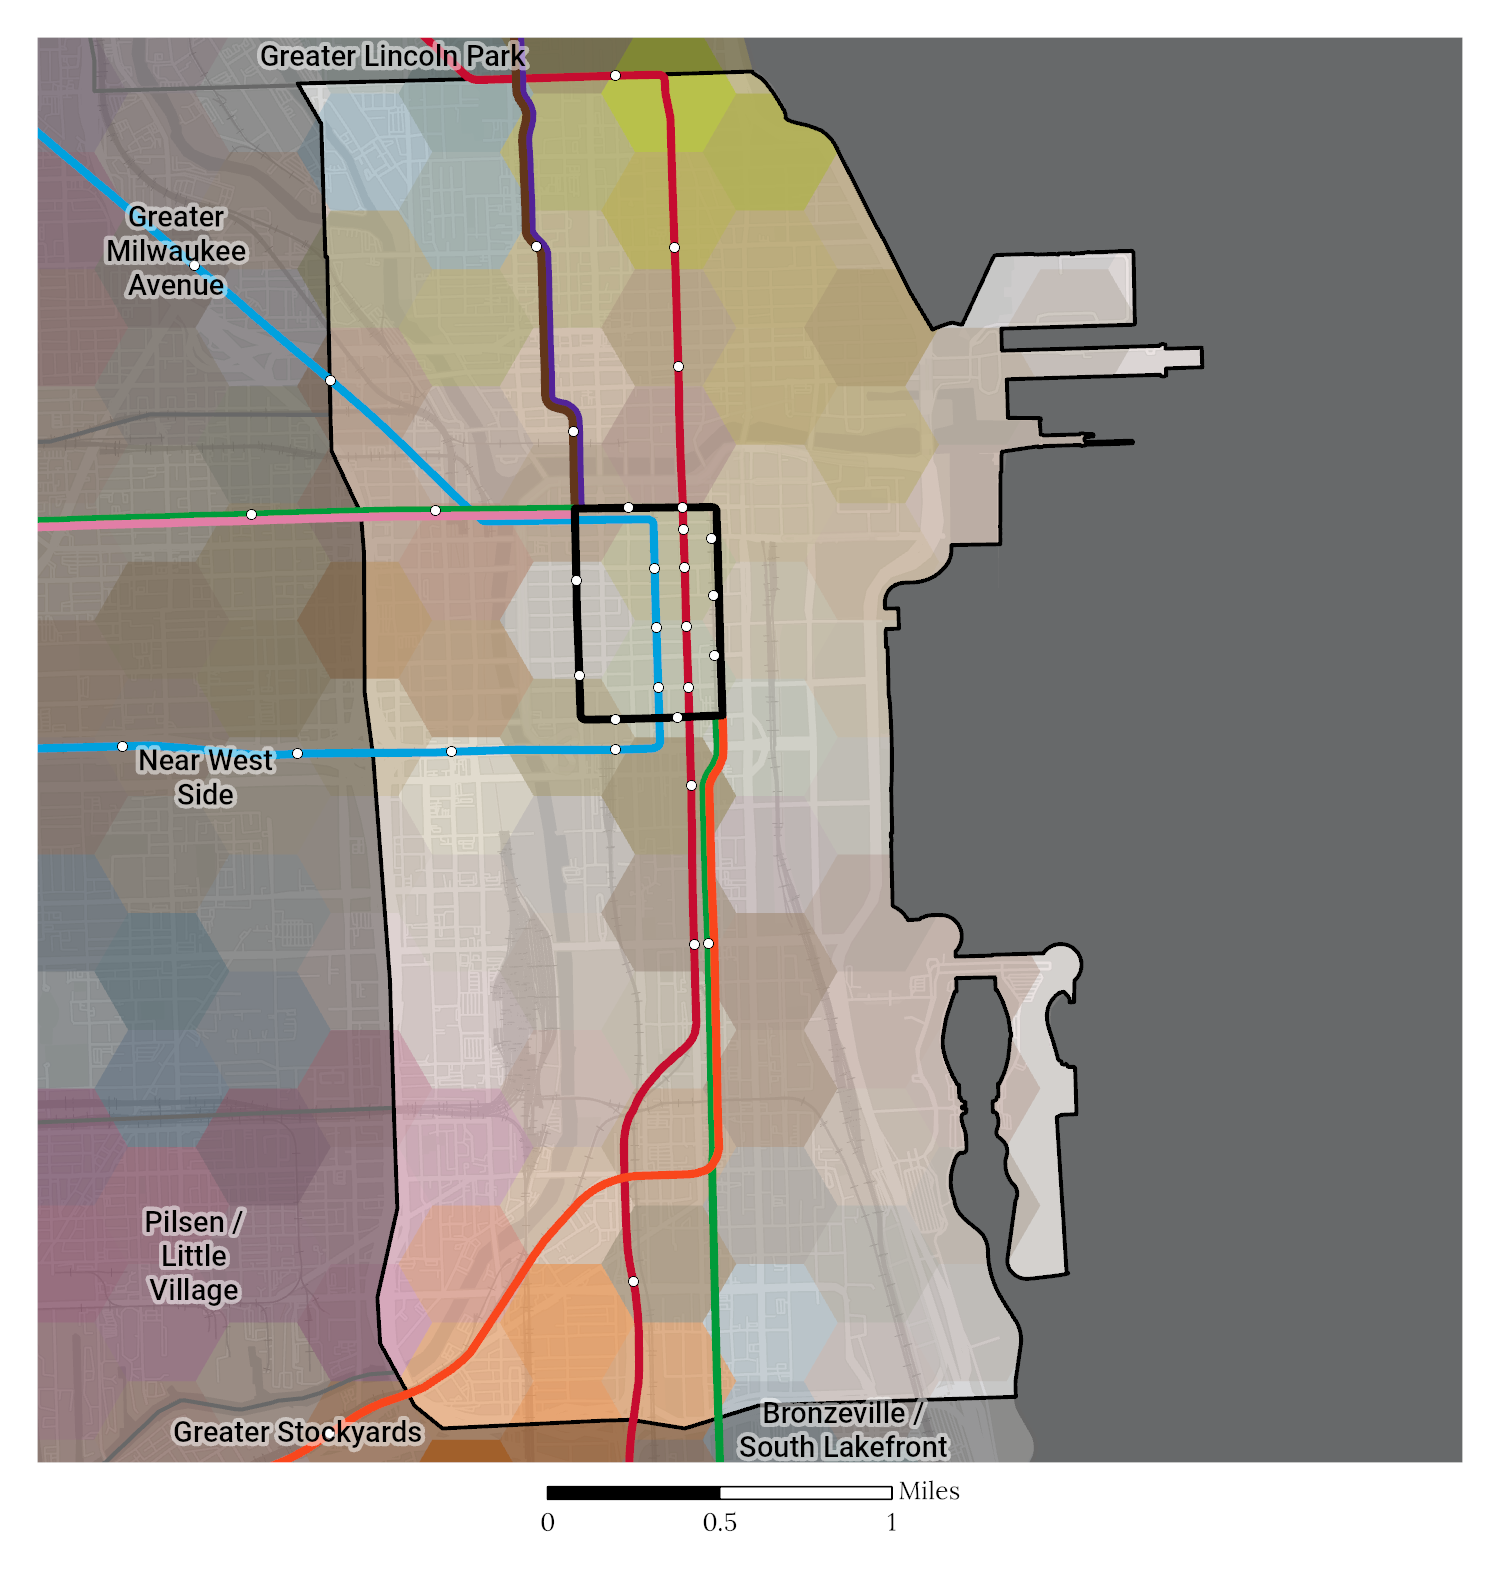 map of chicago neighborhoods by ethnicity